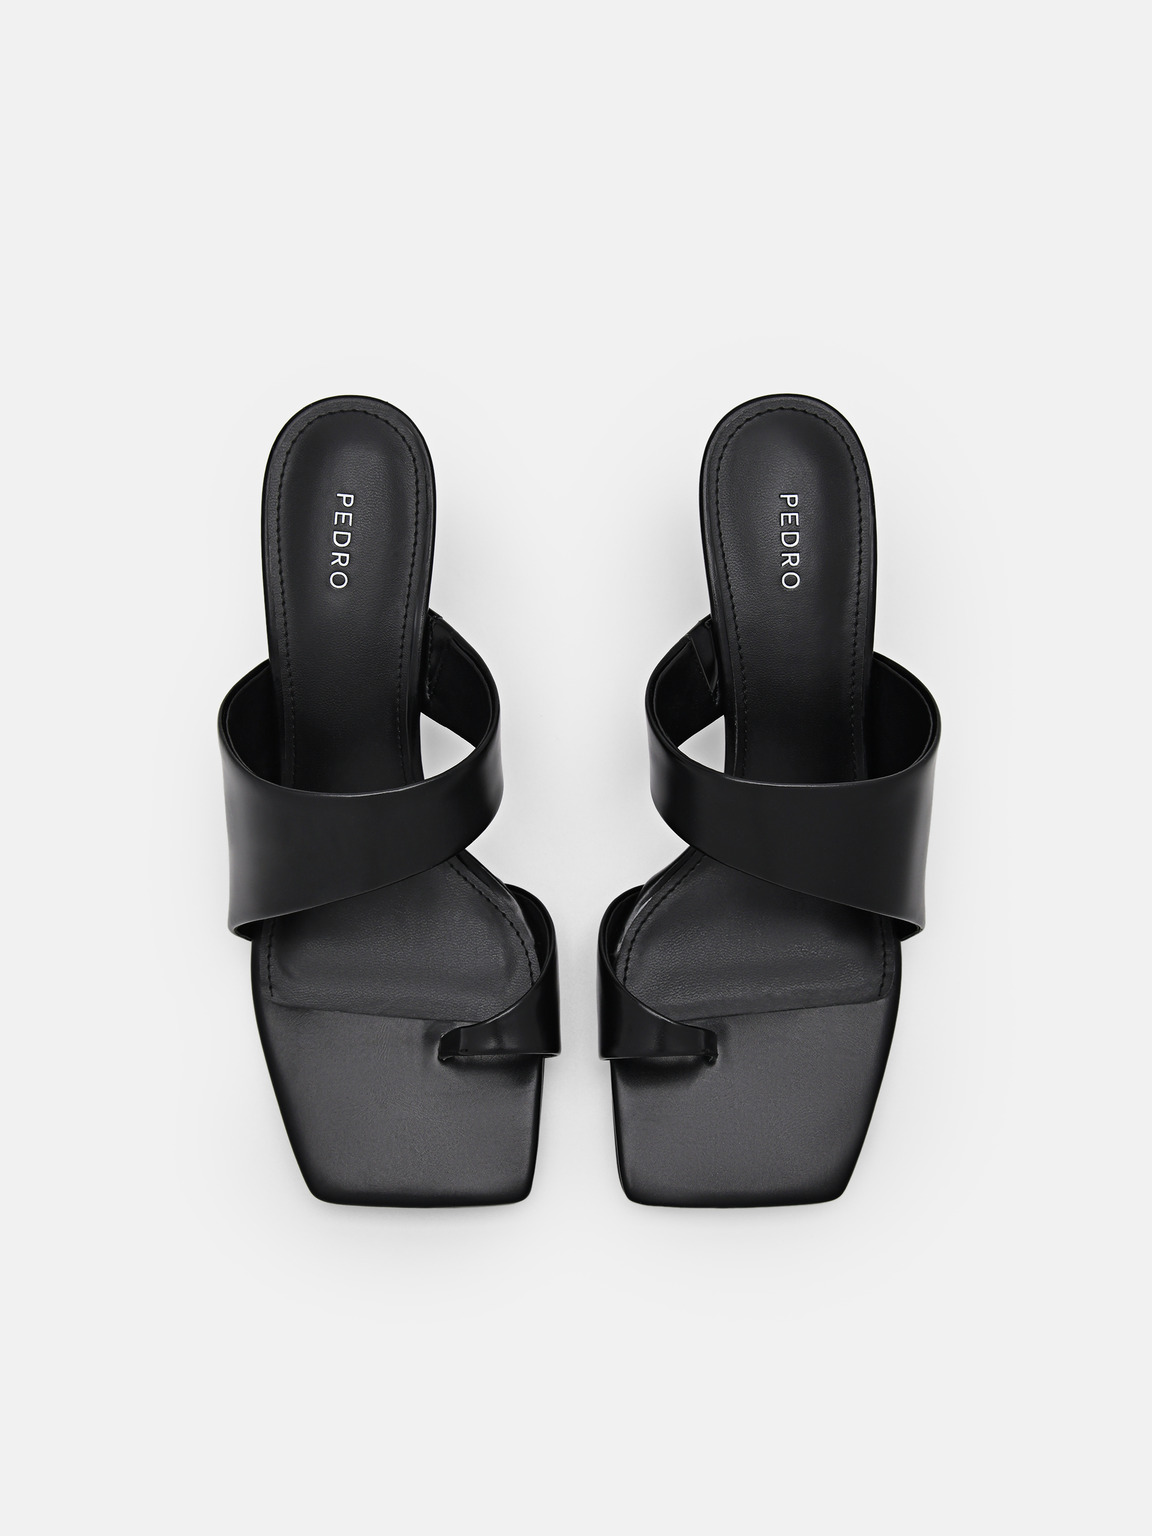 Rocco Leather Heel Sandals, Black